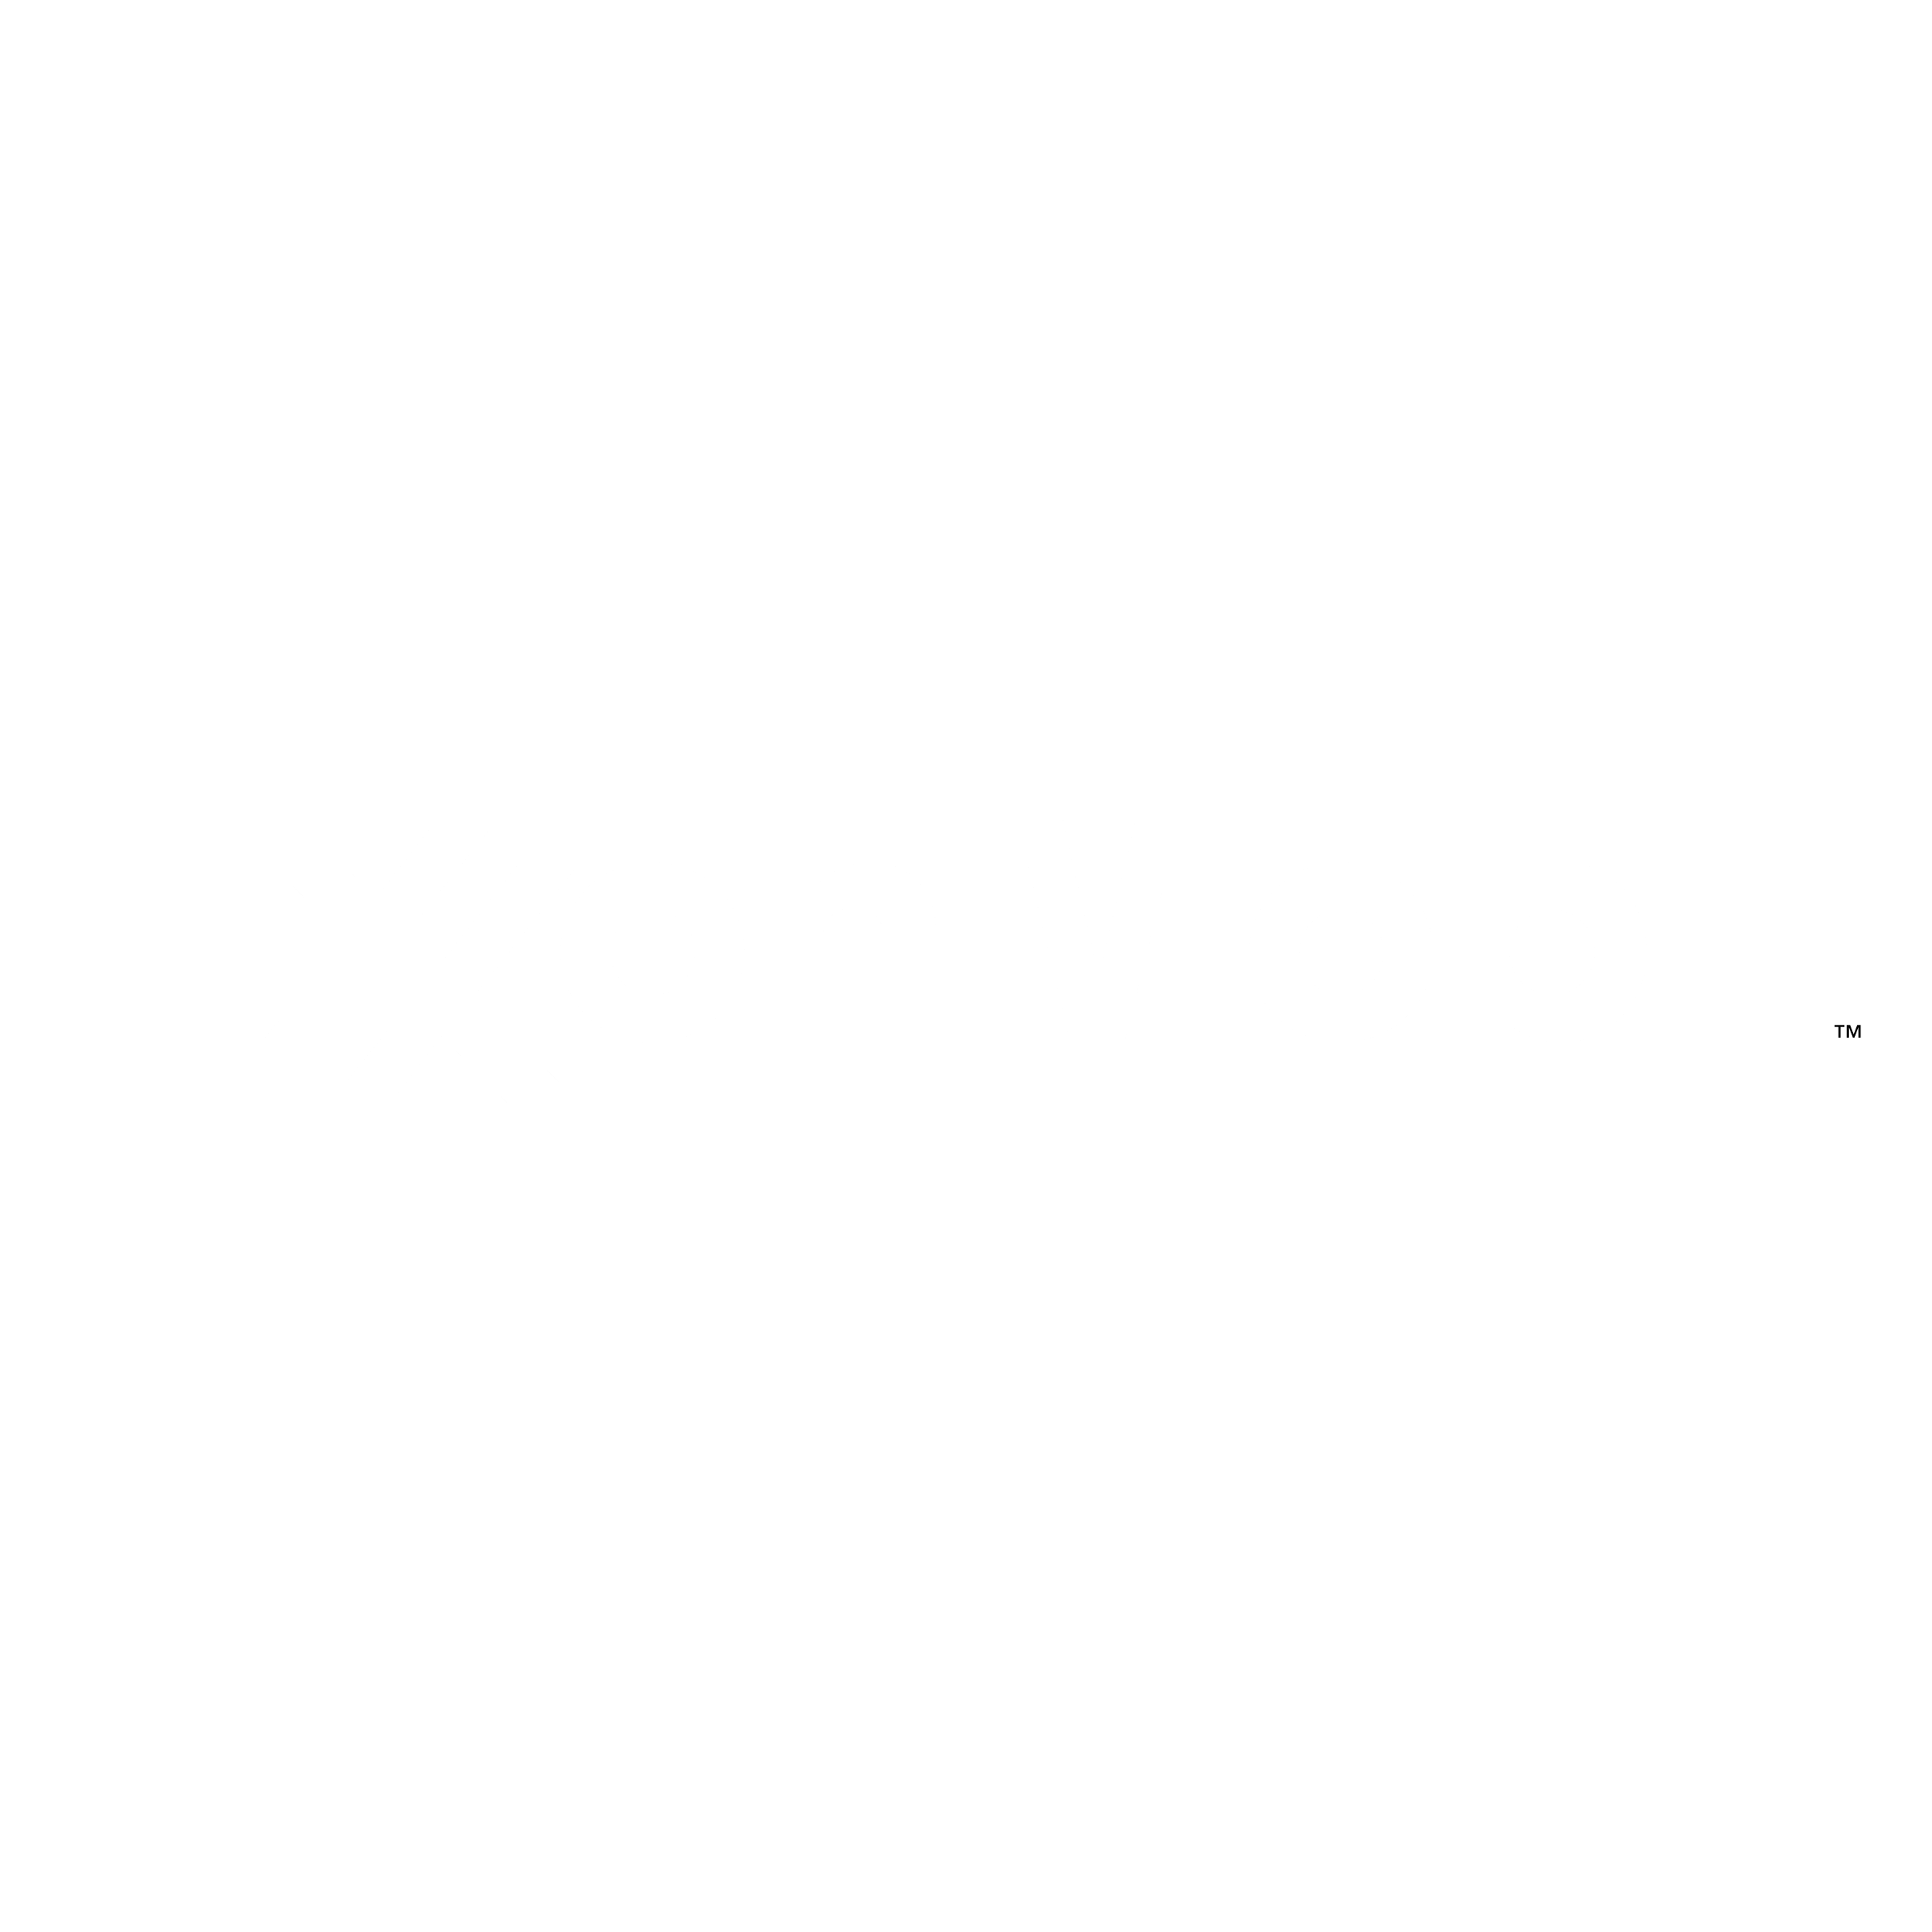 Black and White Mobil Logo - Exxon Mobil Logo PNG Transparent & SVG Vector